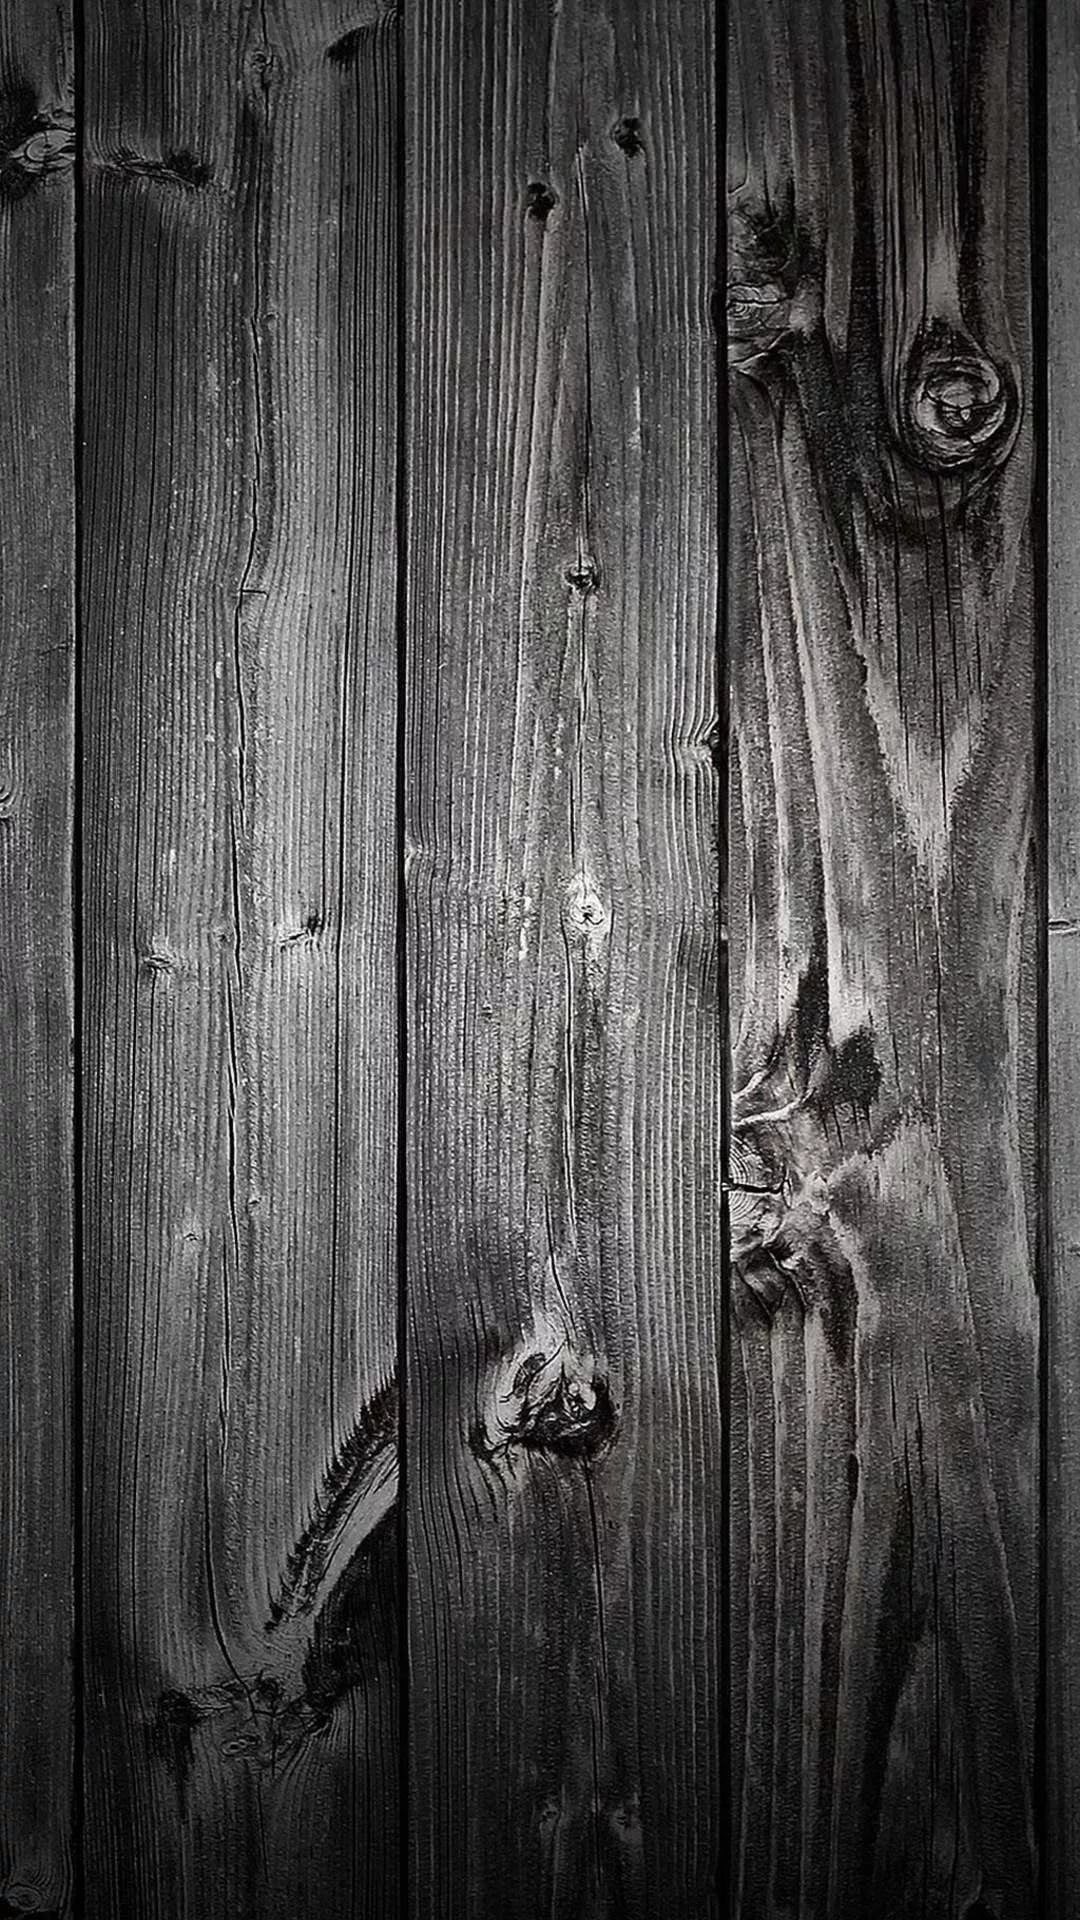 Wood Hd iPhone 7 wallpaper